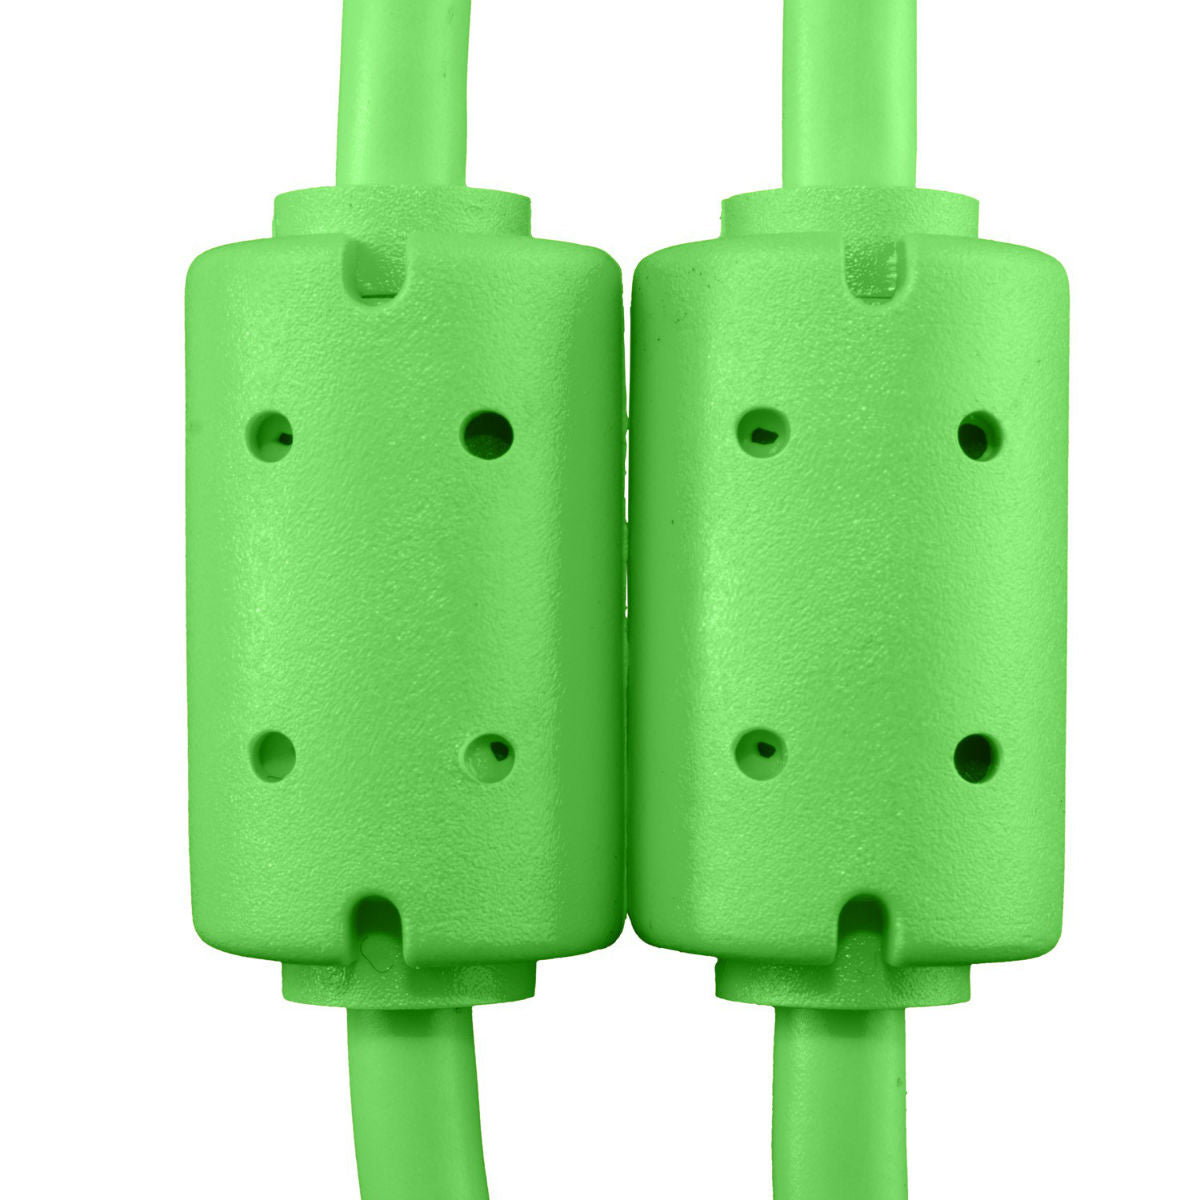 UDG USB Cable A-B 1m Green Angled U95004GR